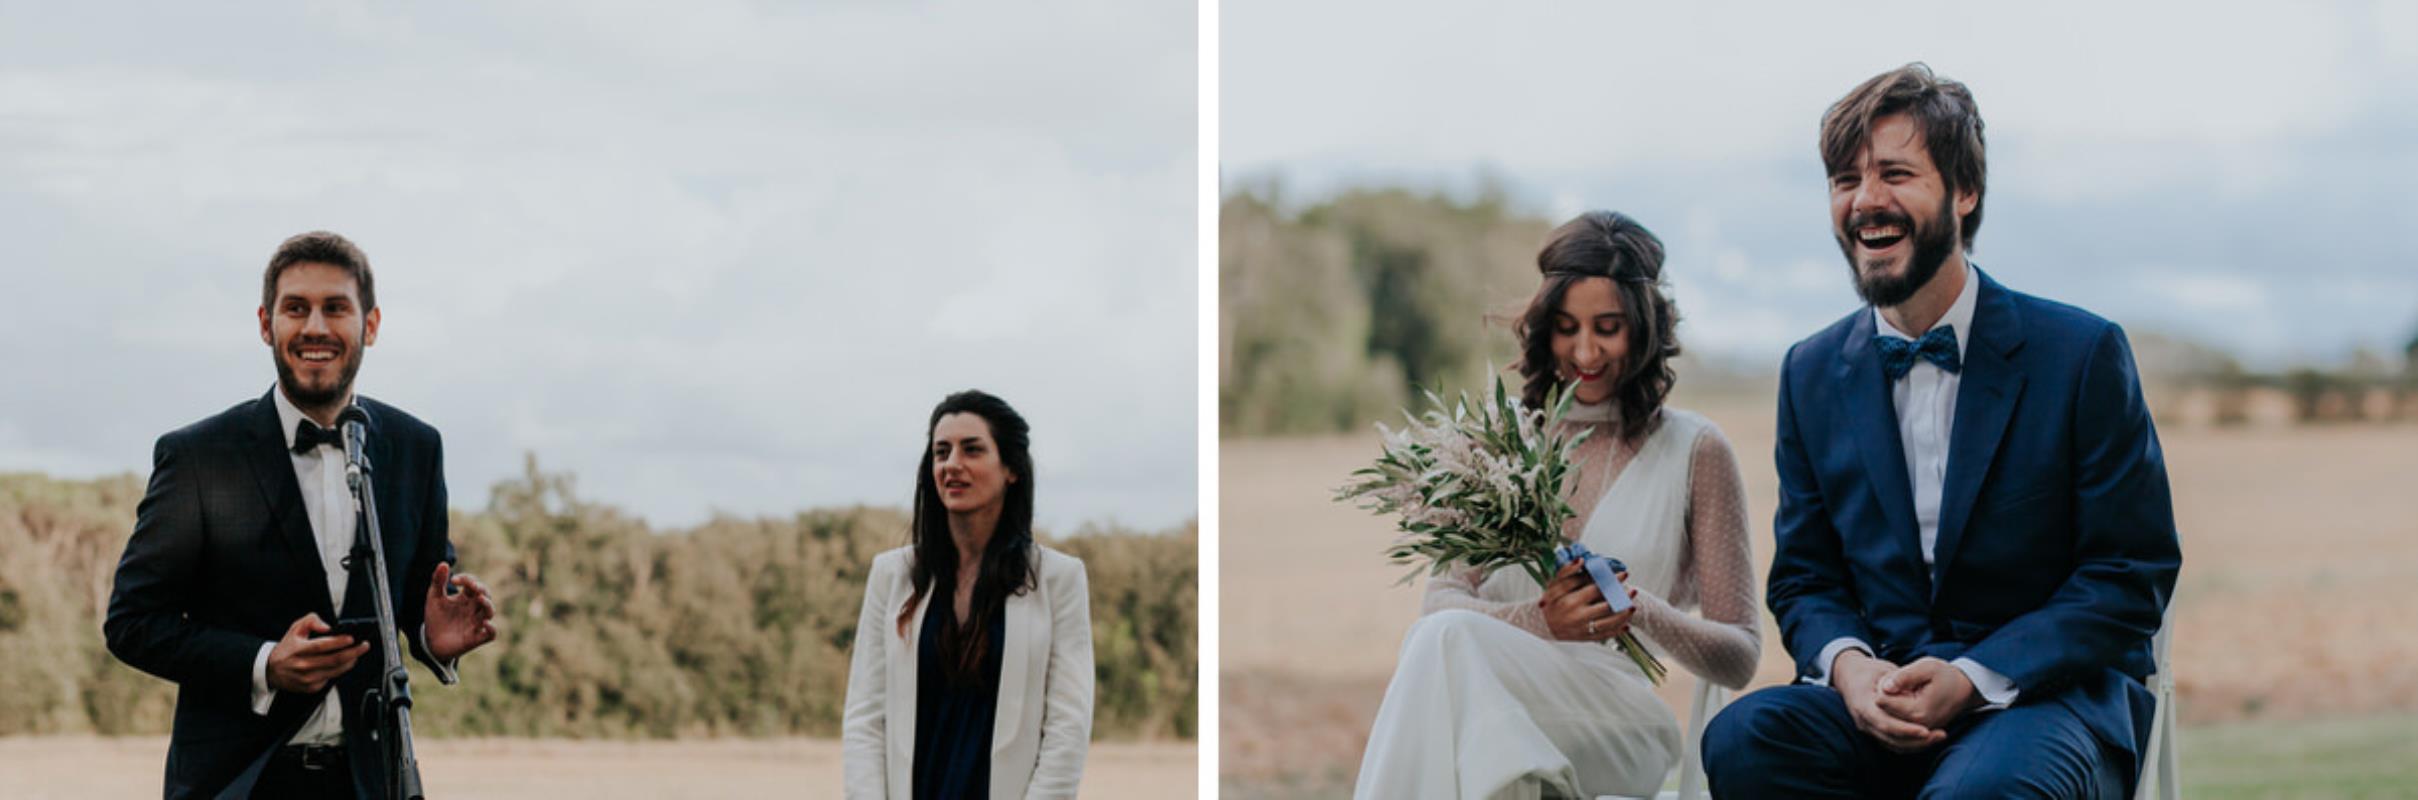 mer-rualwedding | Laura Stramacchia | Wedding Photography